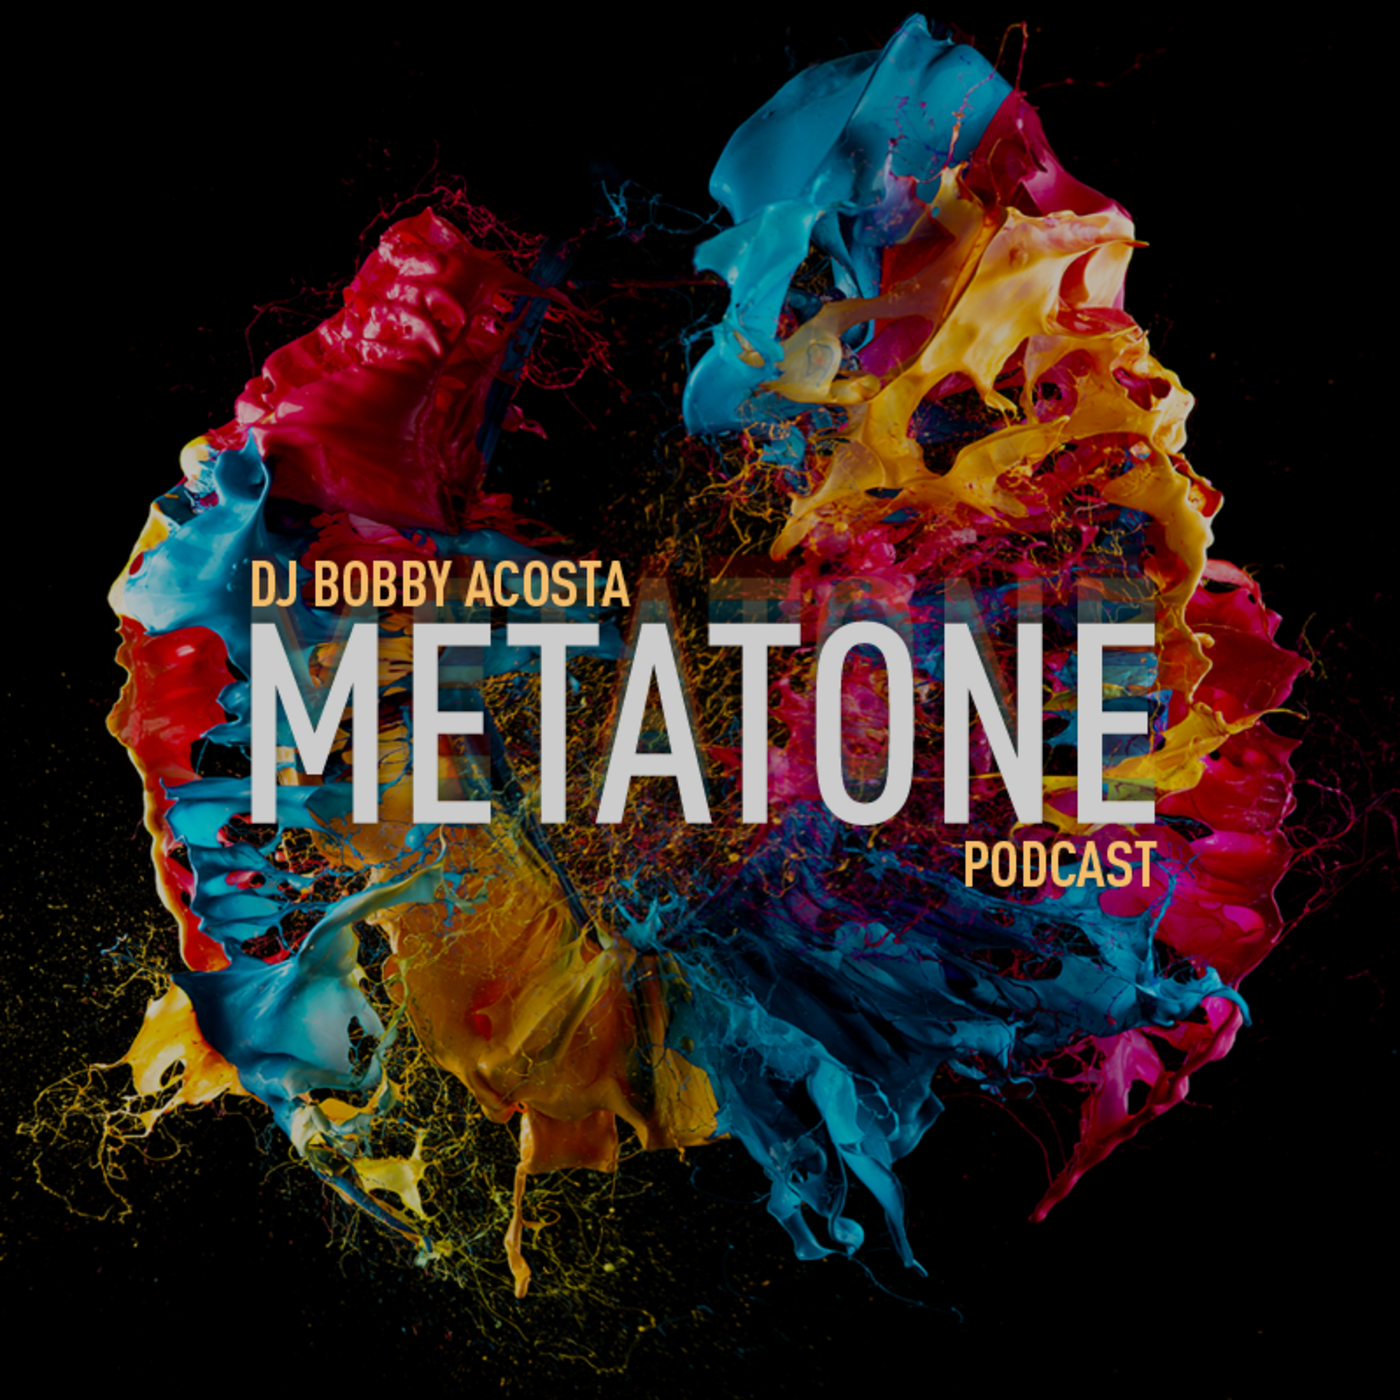 Metatone Podcast by B.Acosta